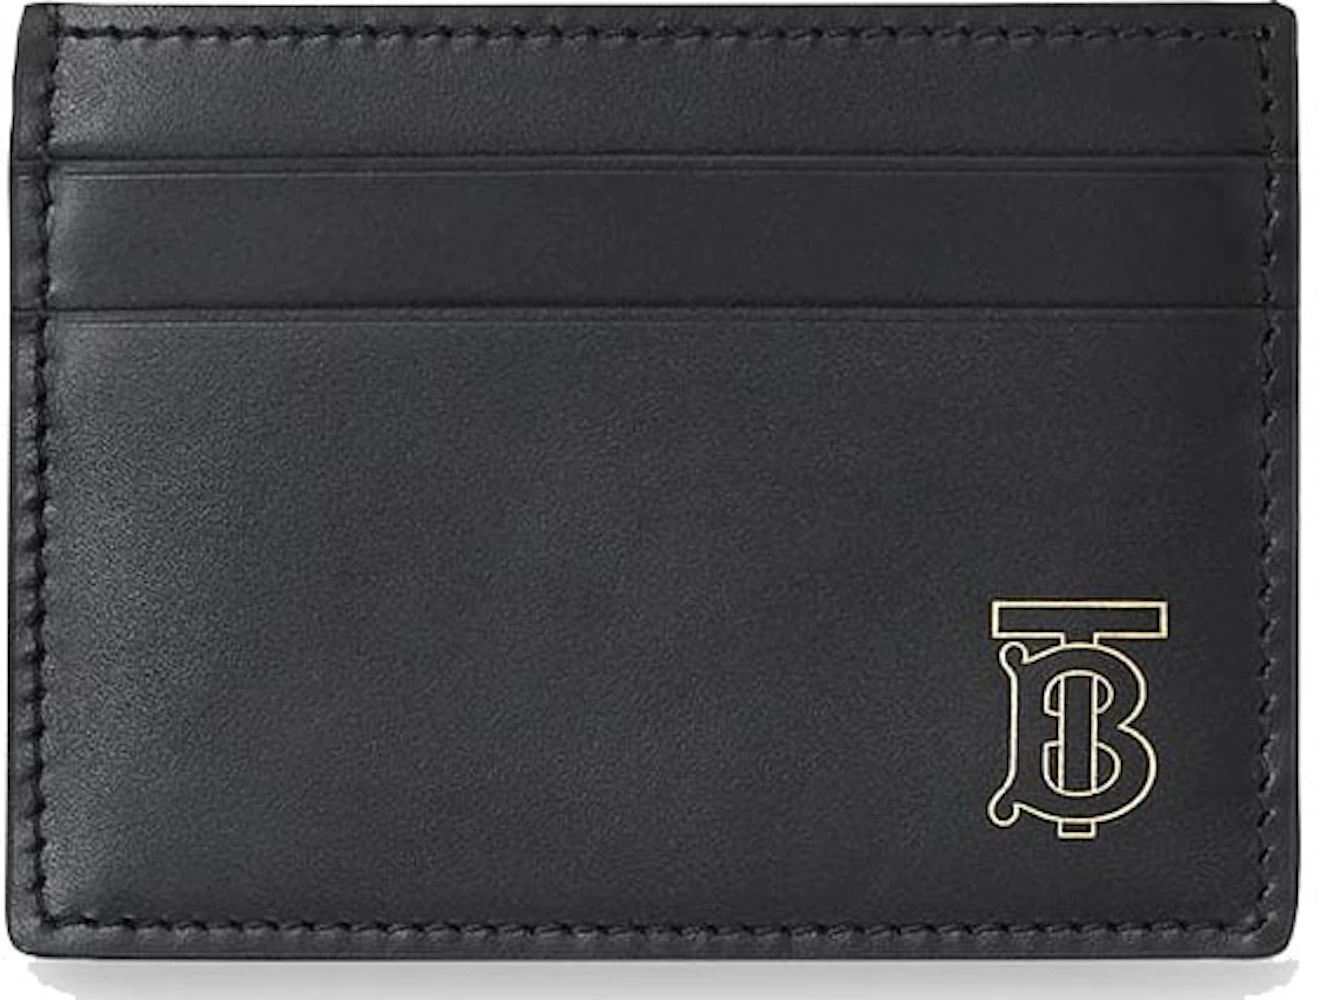 Burberry Vintage Check International Bifold Wallet 8 Slot Black in Calfskin  - US